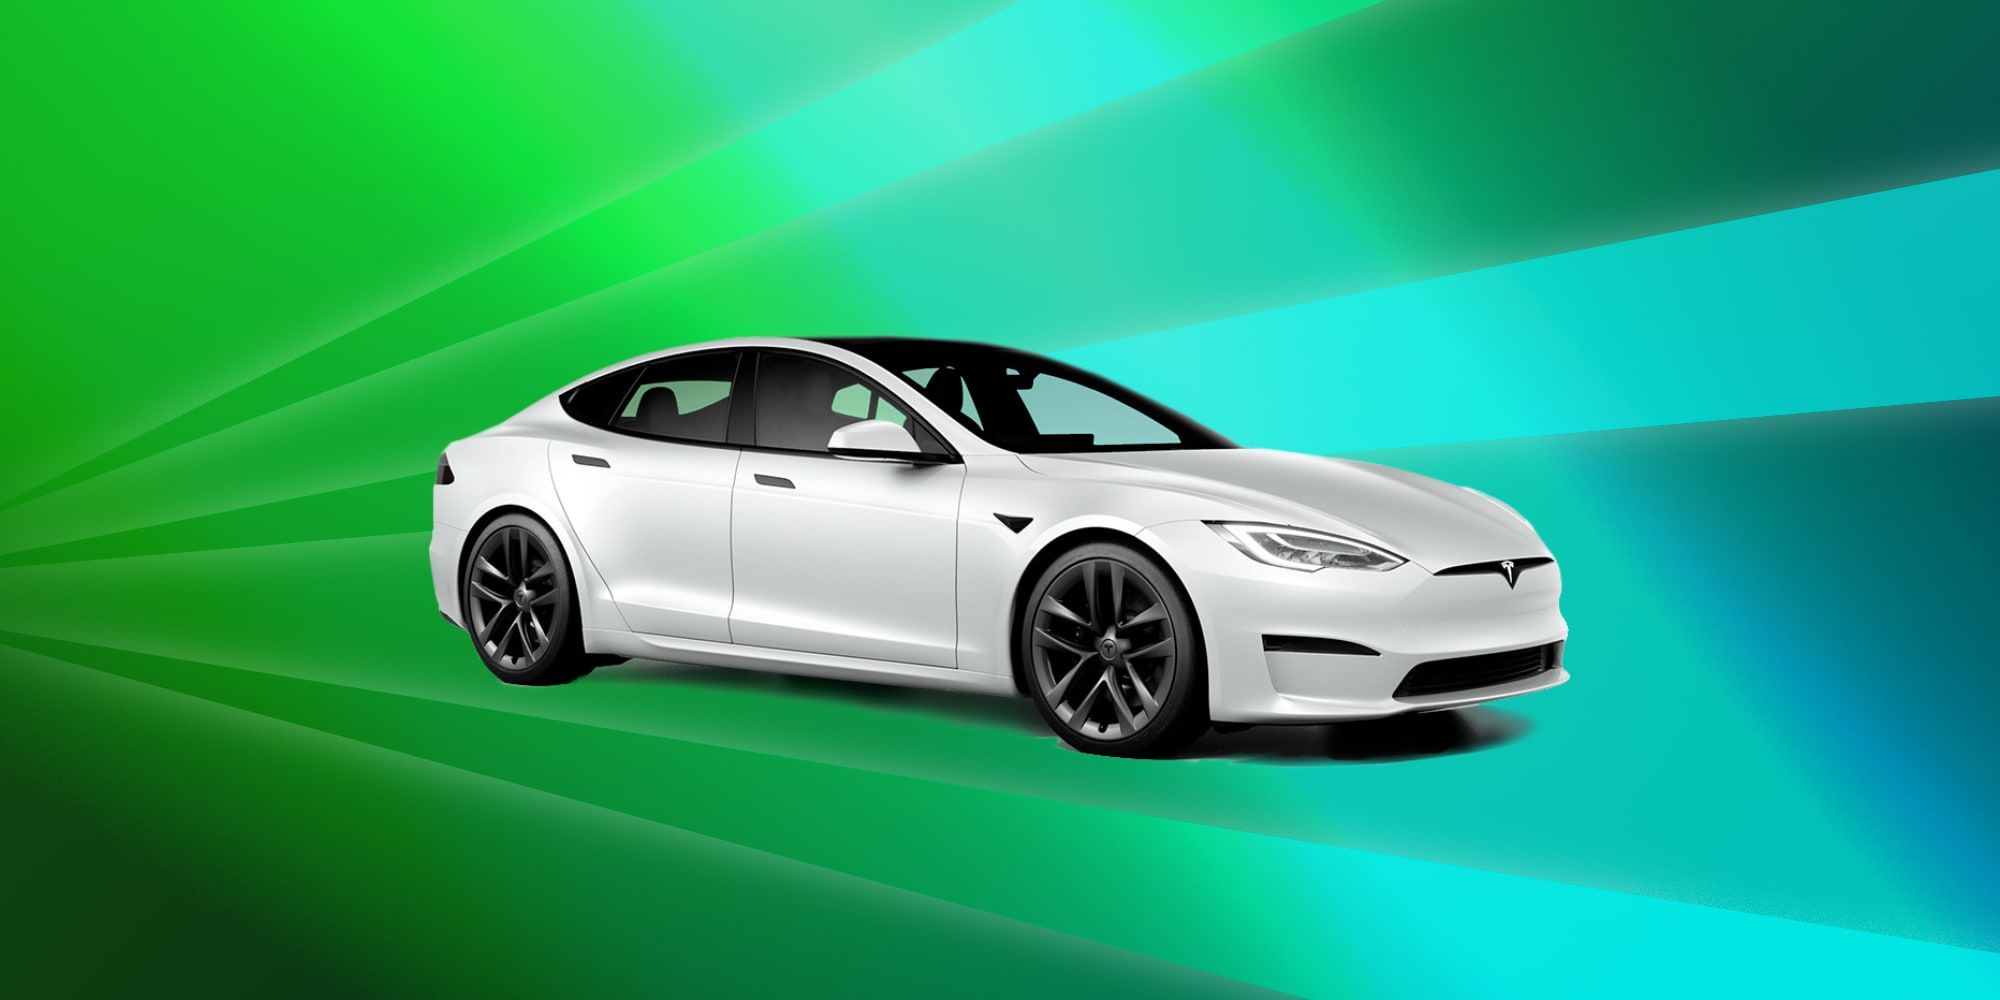 Tesla Model S Over Green Explosion BG Battery Fast Racing Future